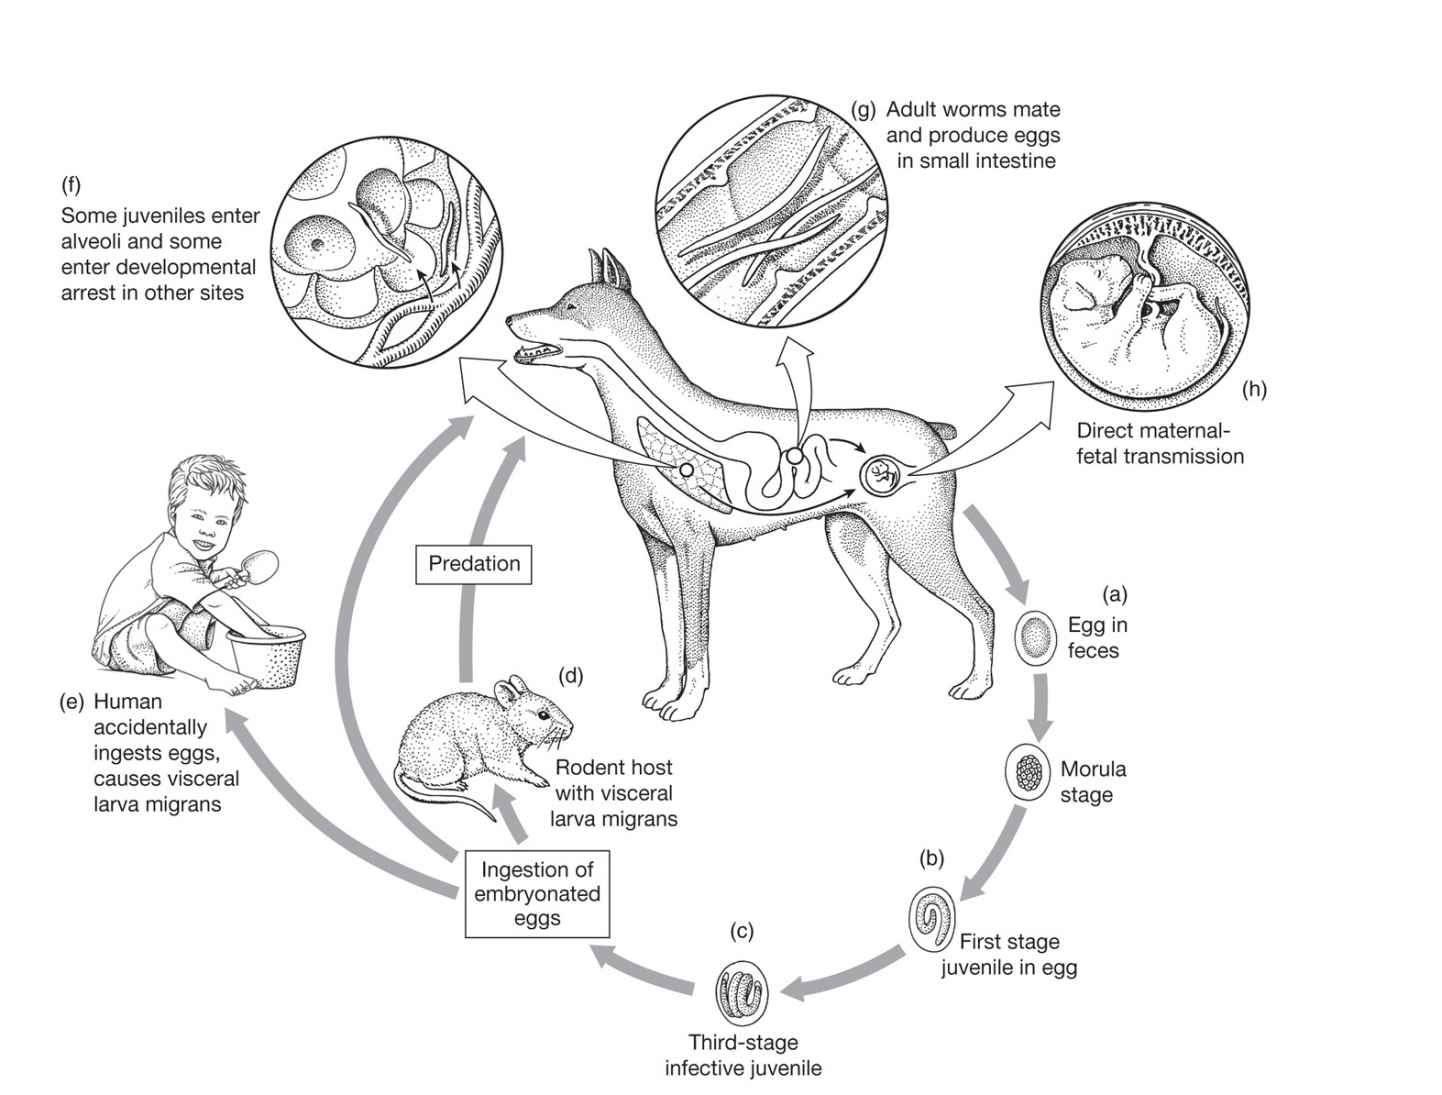 Toxocara Canis Life Cycle